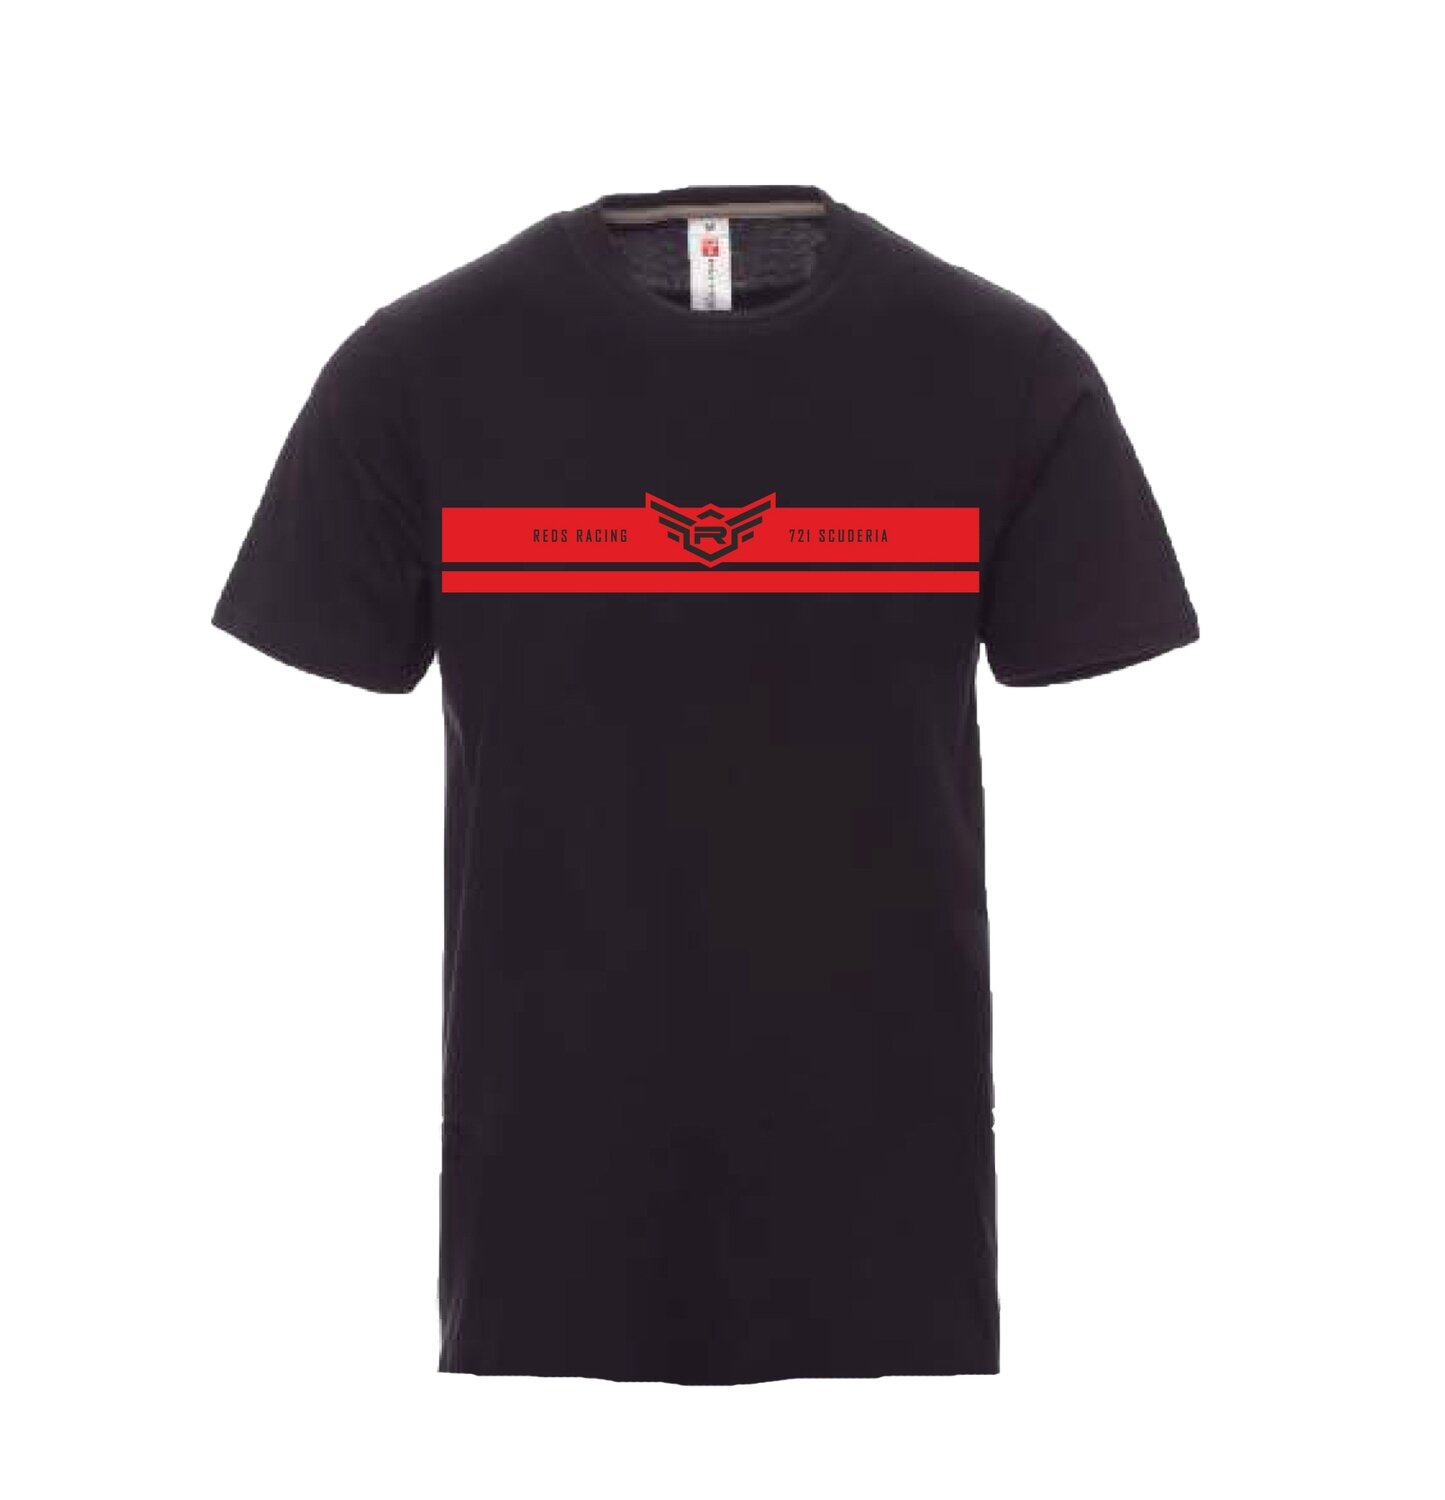 Camiseta Reds Racing Black/Red Talla L